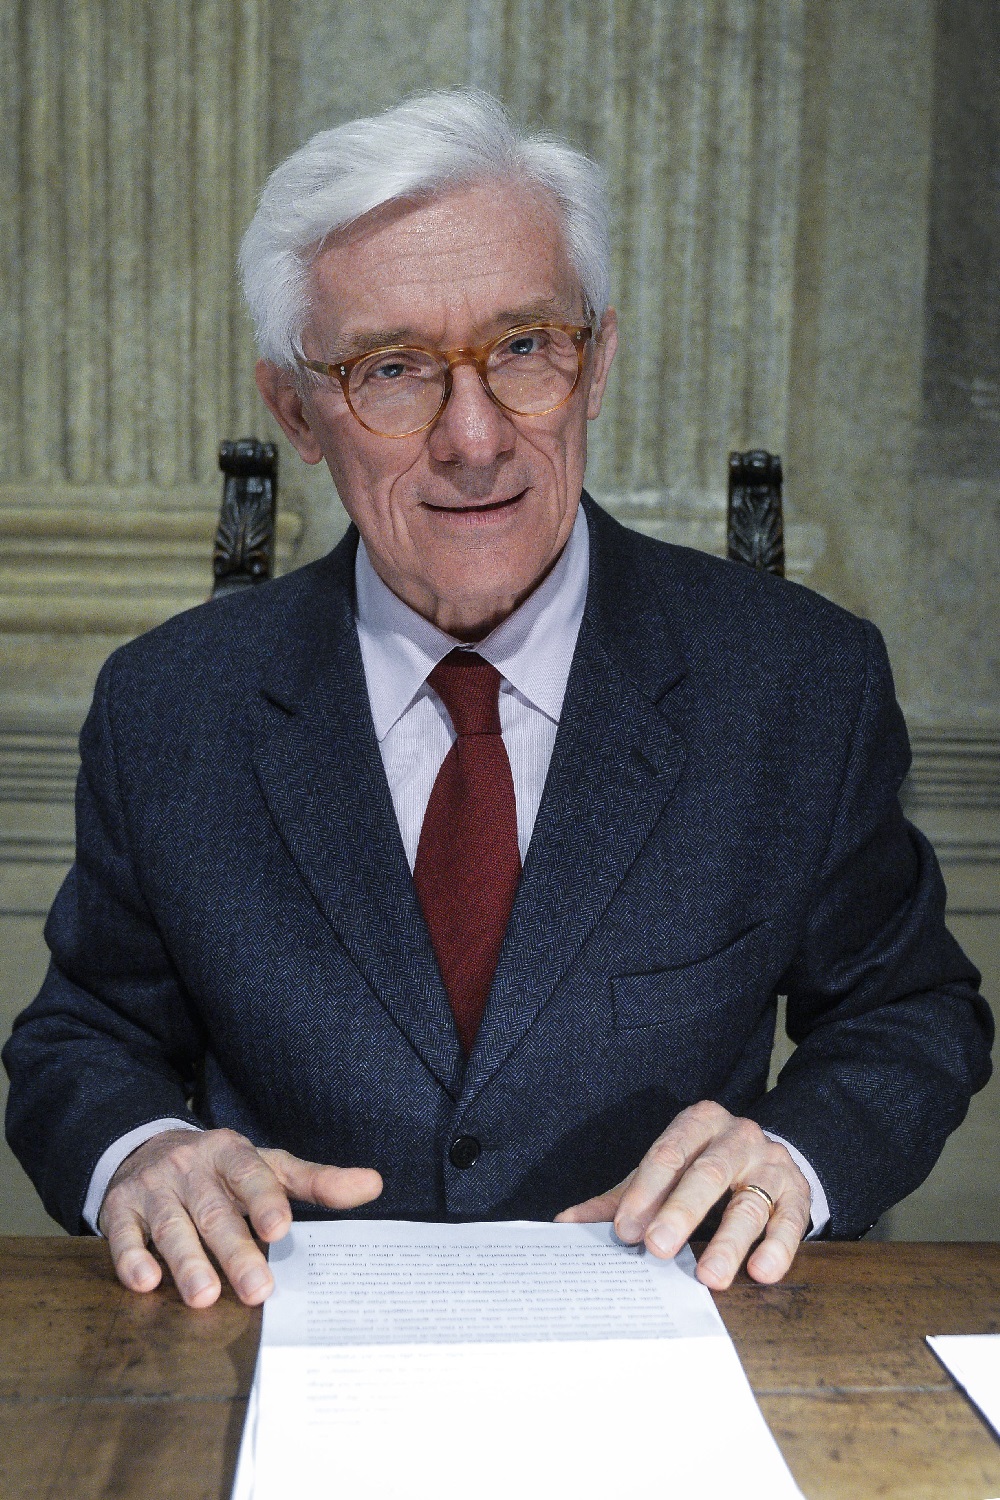 Paolo Corsini